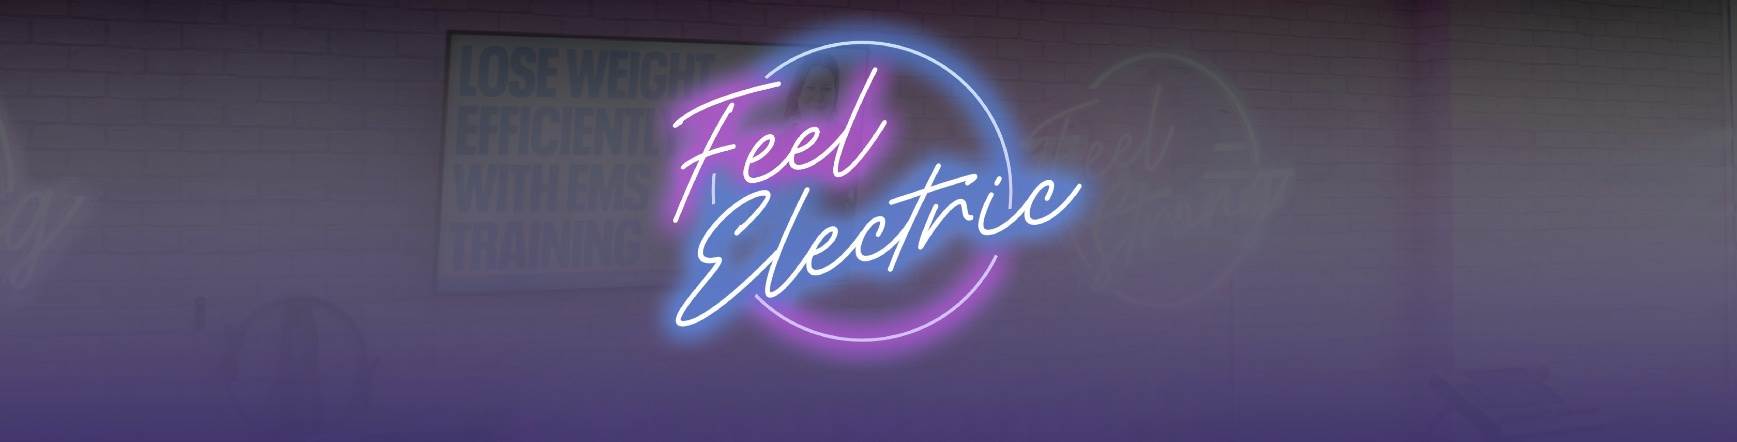 Feel electric